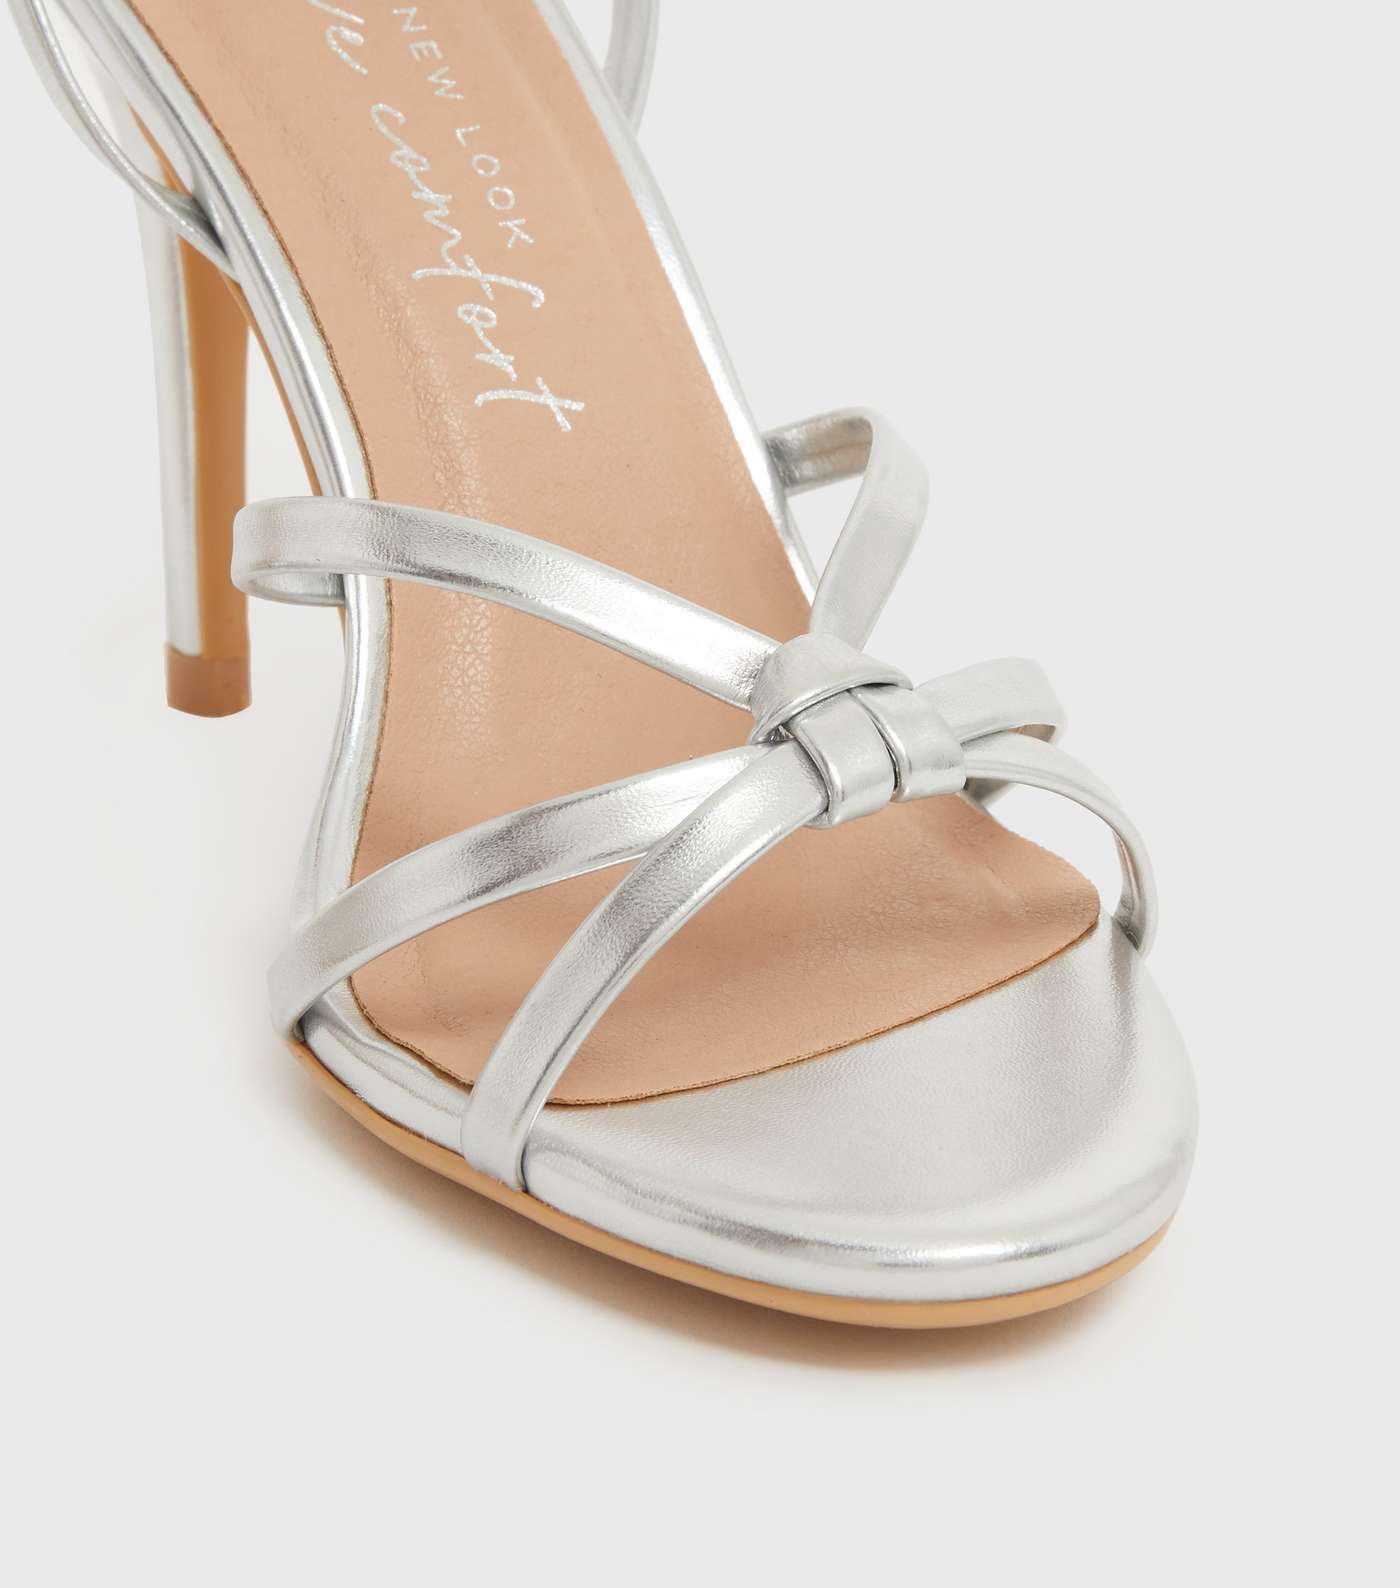 Silver Metallic Strappy Stiletto Heel Sandals Image 4